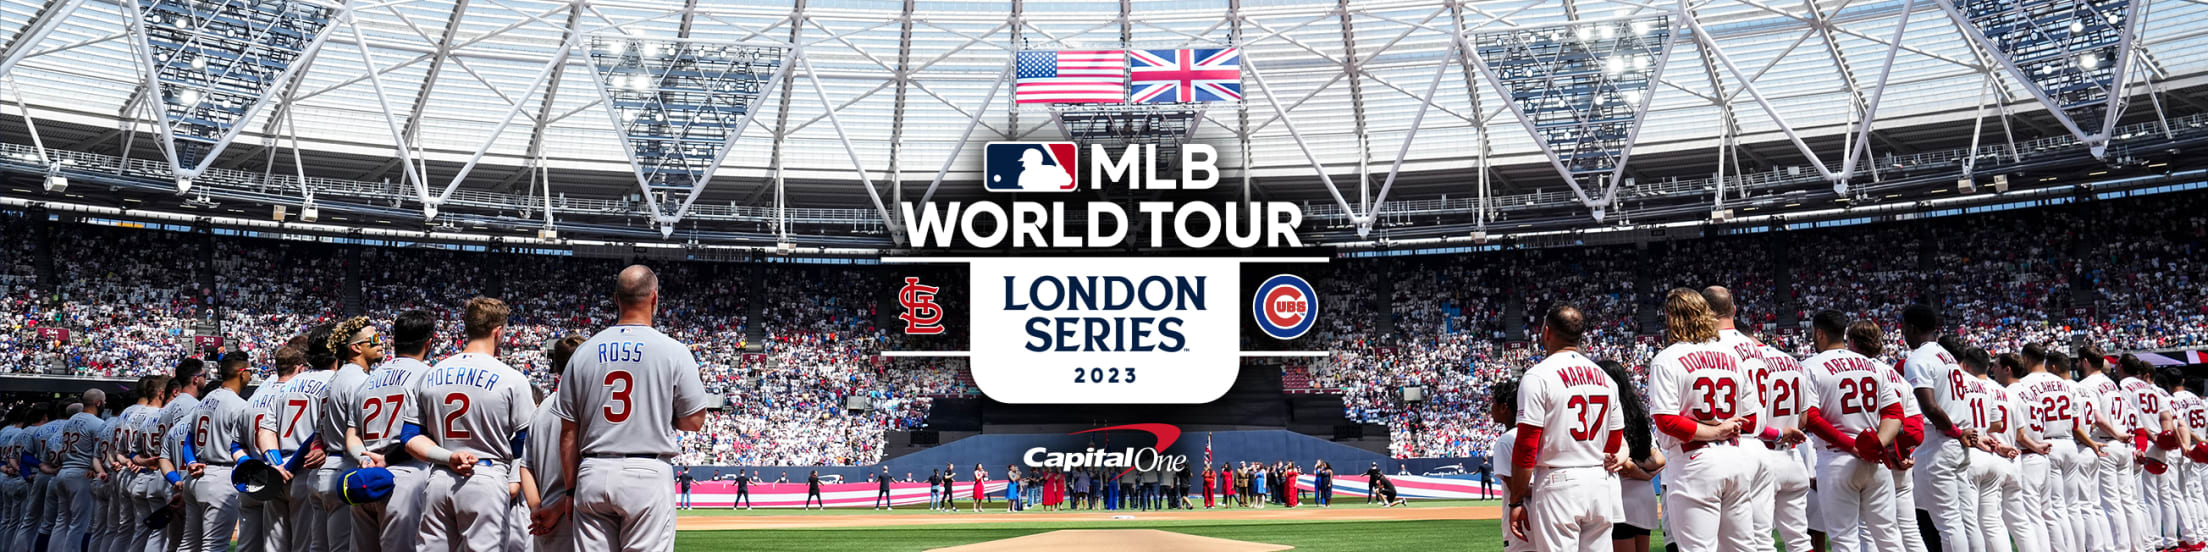 London Series, MLB International